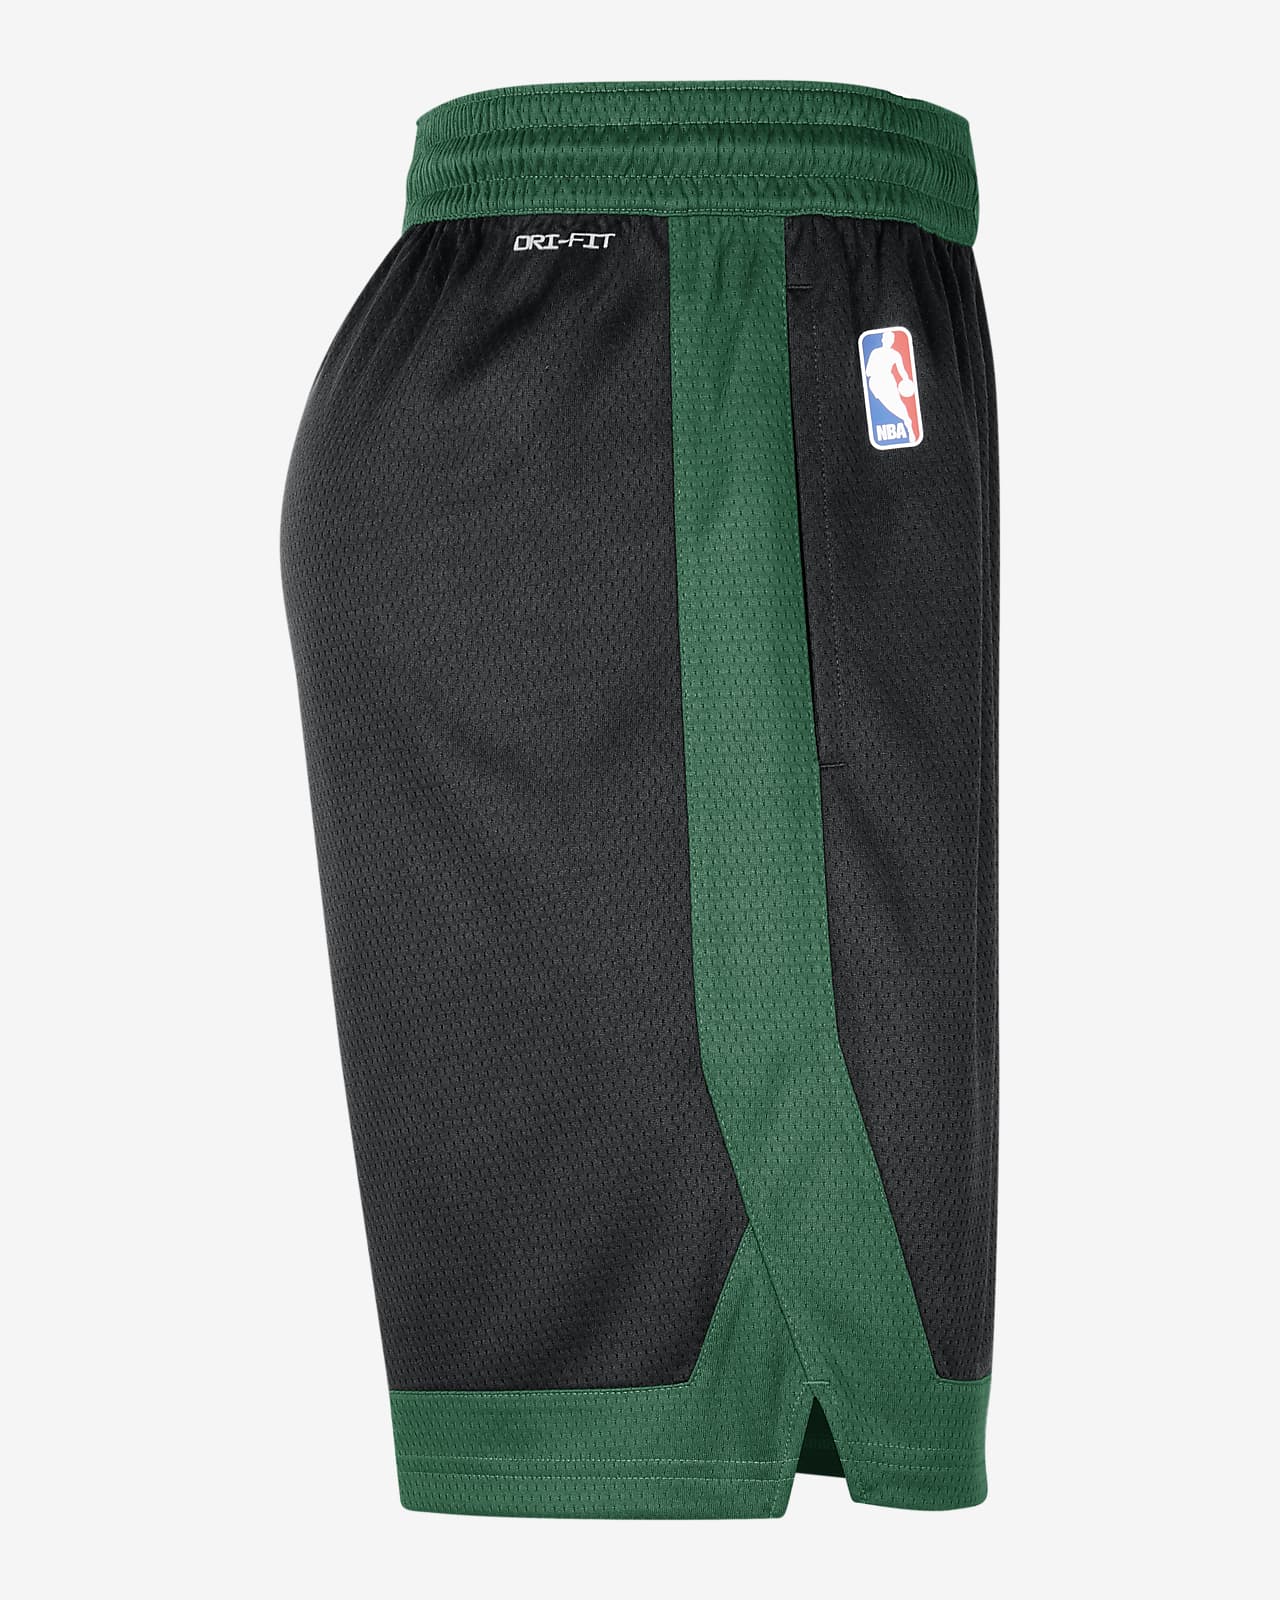 Boston Celtics Statement Edition Mens Jordan Dri Fit Nba Swingman Basketball Shorts Nike Cz 